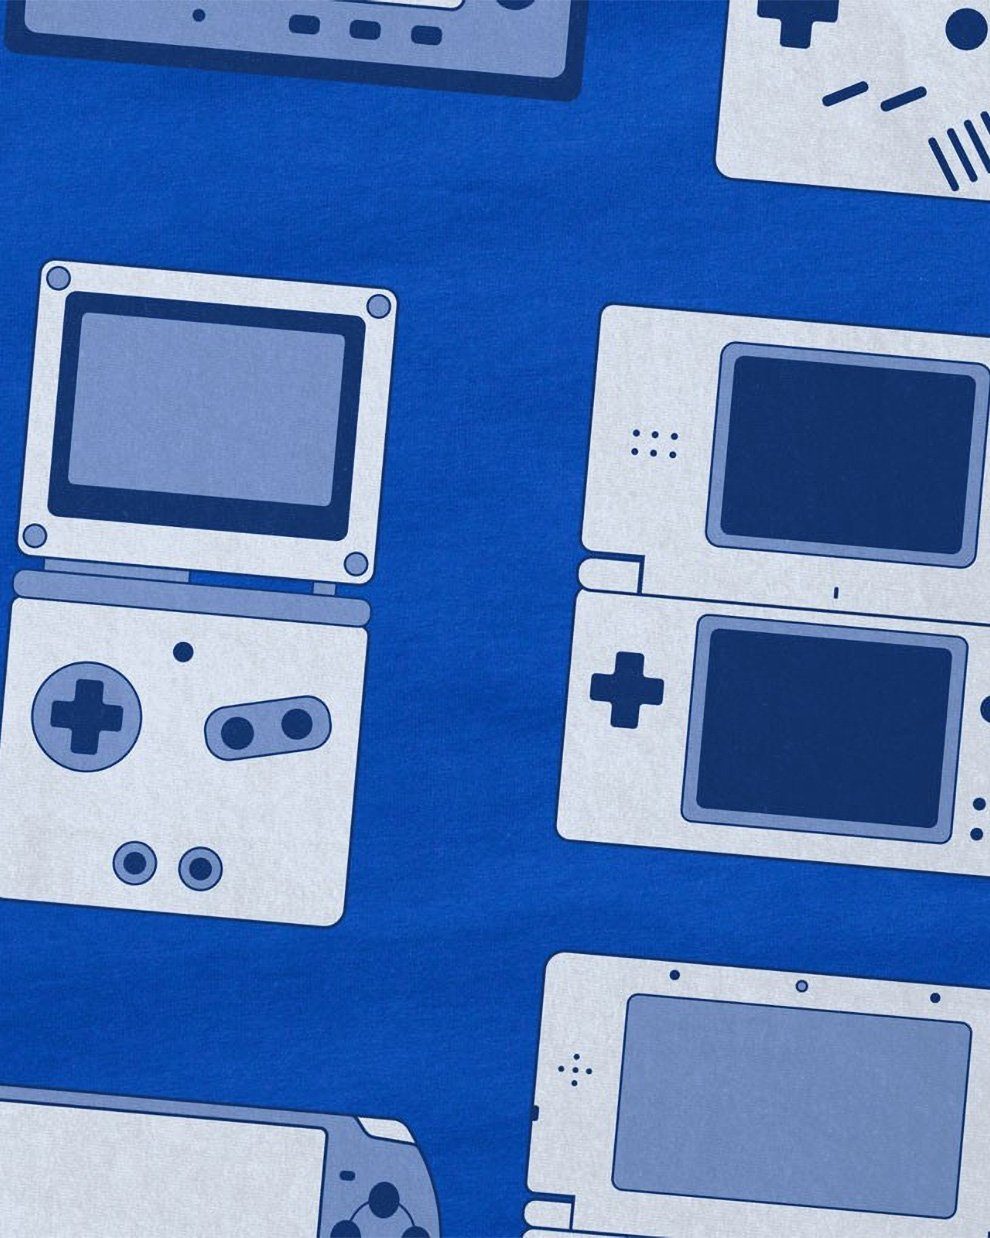 style3 Print-Shirt Kinder T-Shirt Handheld videospiel Konsole spielekonsole blau controller